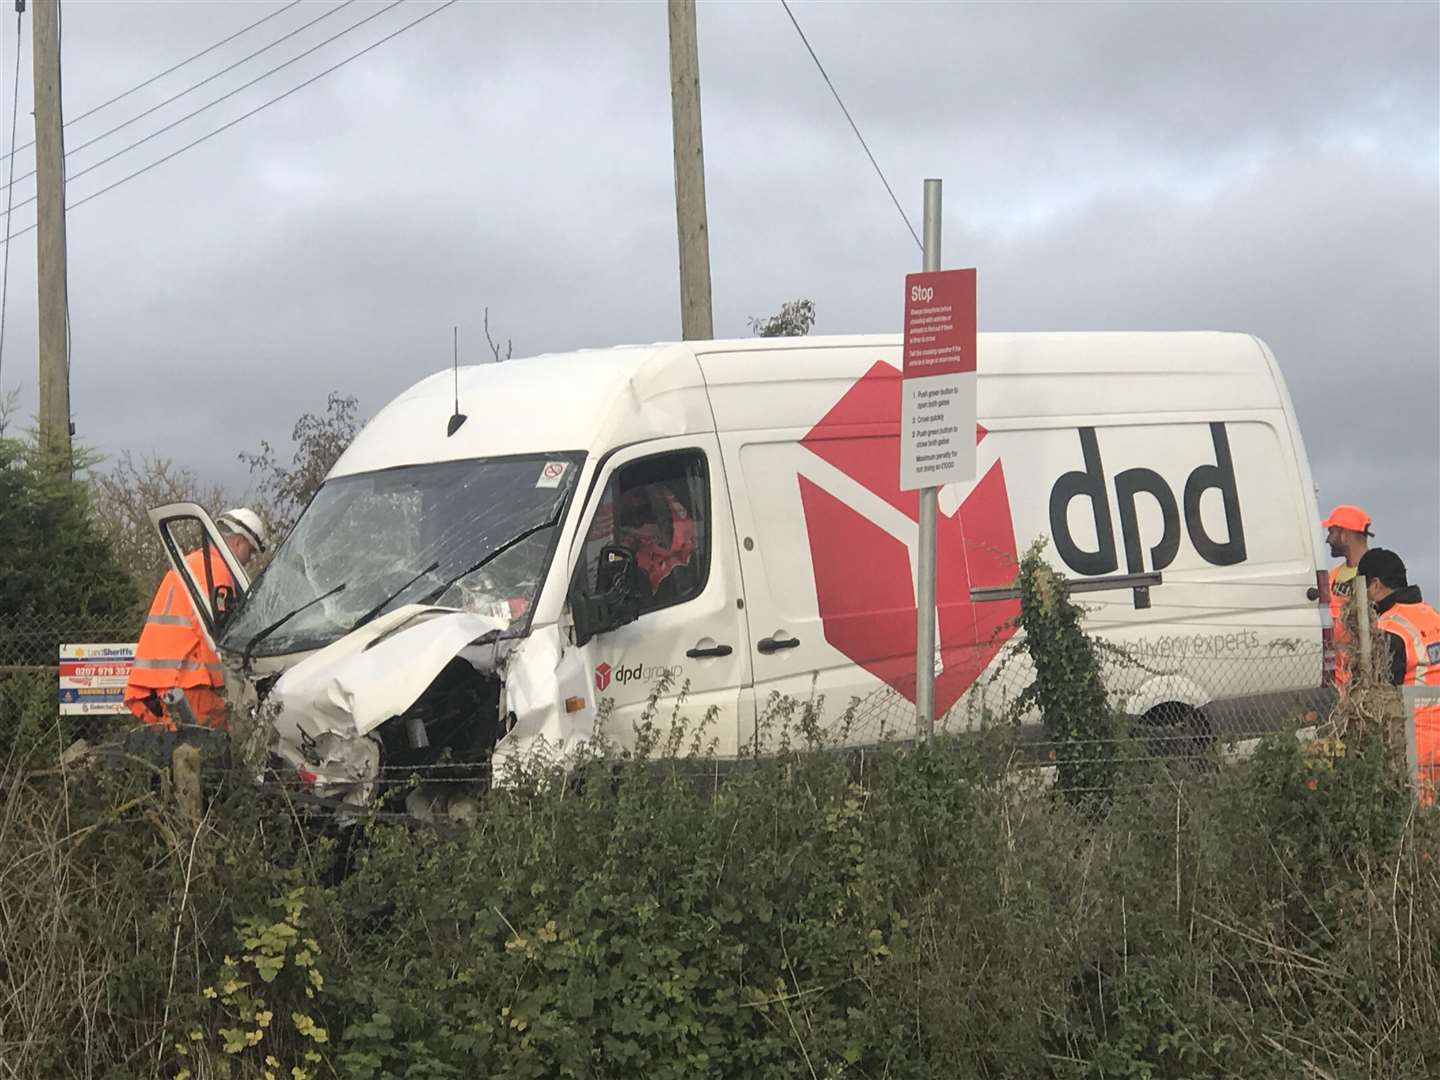 The damaged van at the level crossing in Lower Road, Teynham